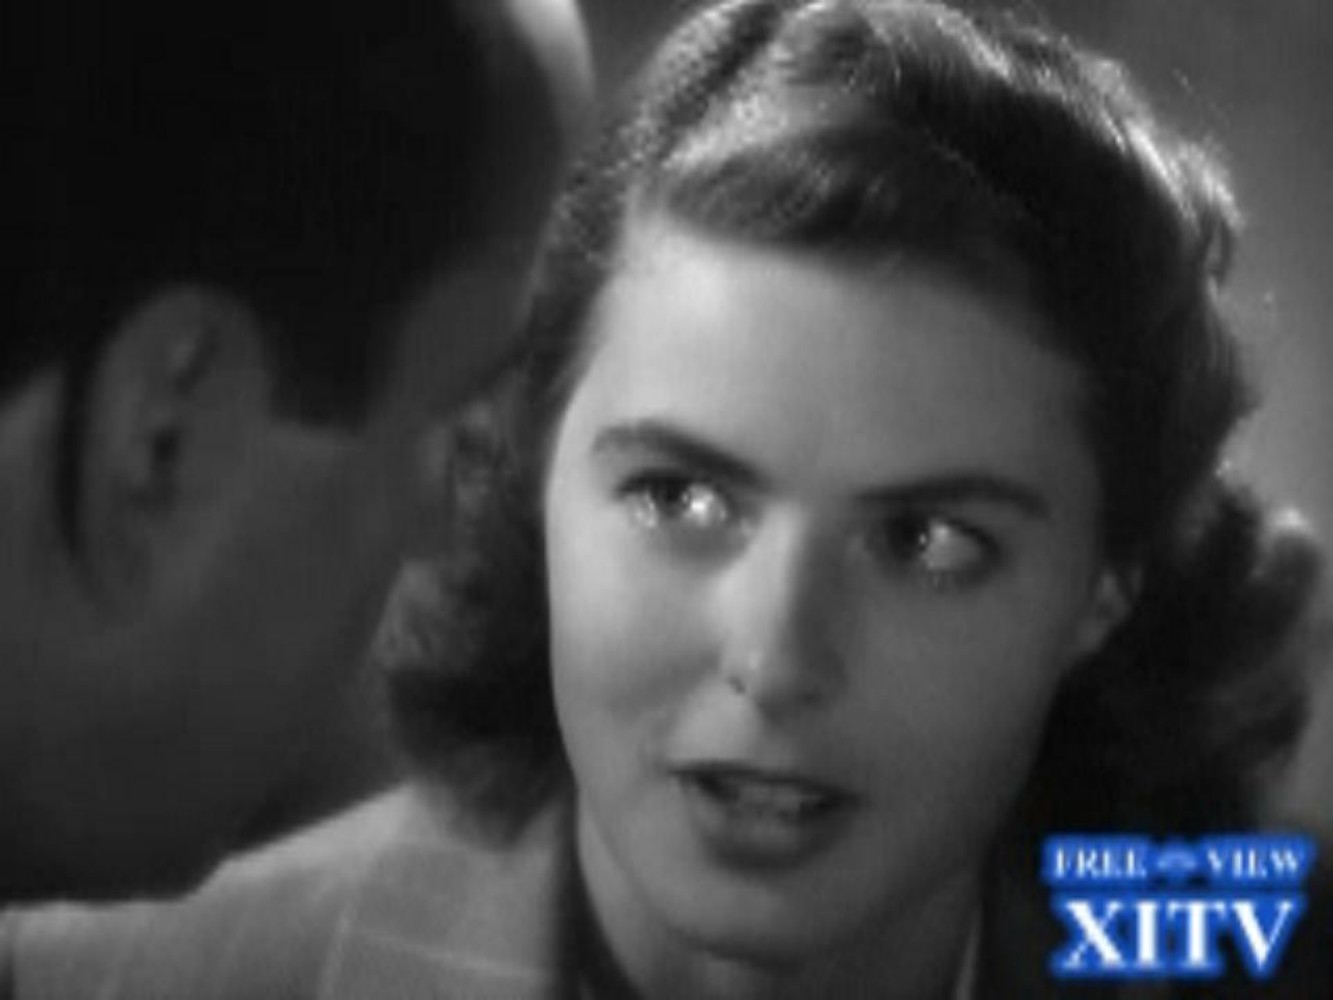 Watch Now! XITV FREE <> VIEW™  "CASABLANCA" Starring Ingrid Bergman and Humphrey Bogart! XITV Is Must See TV! 